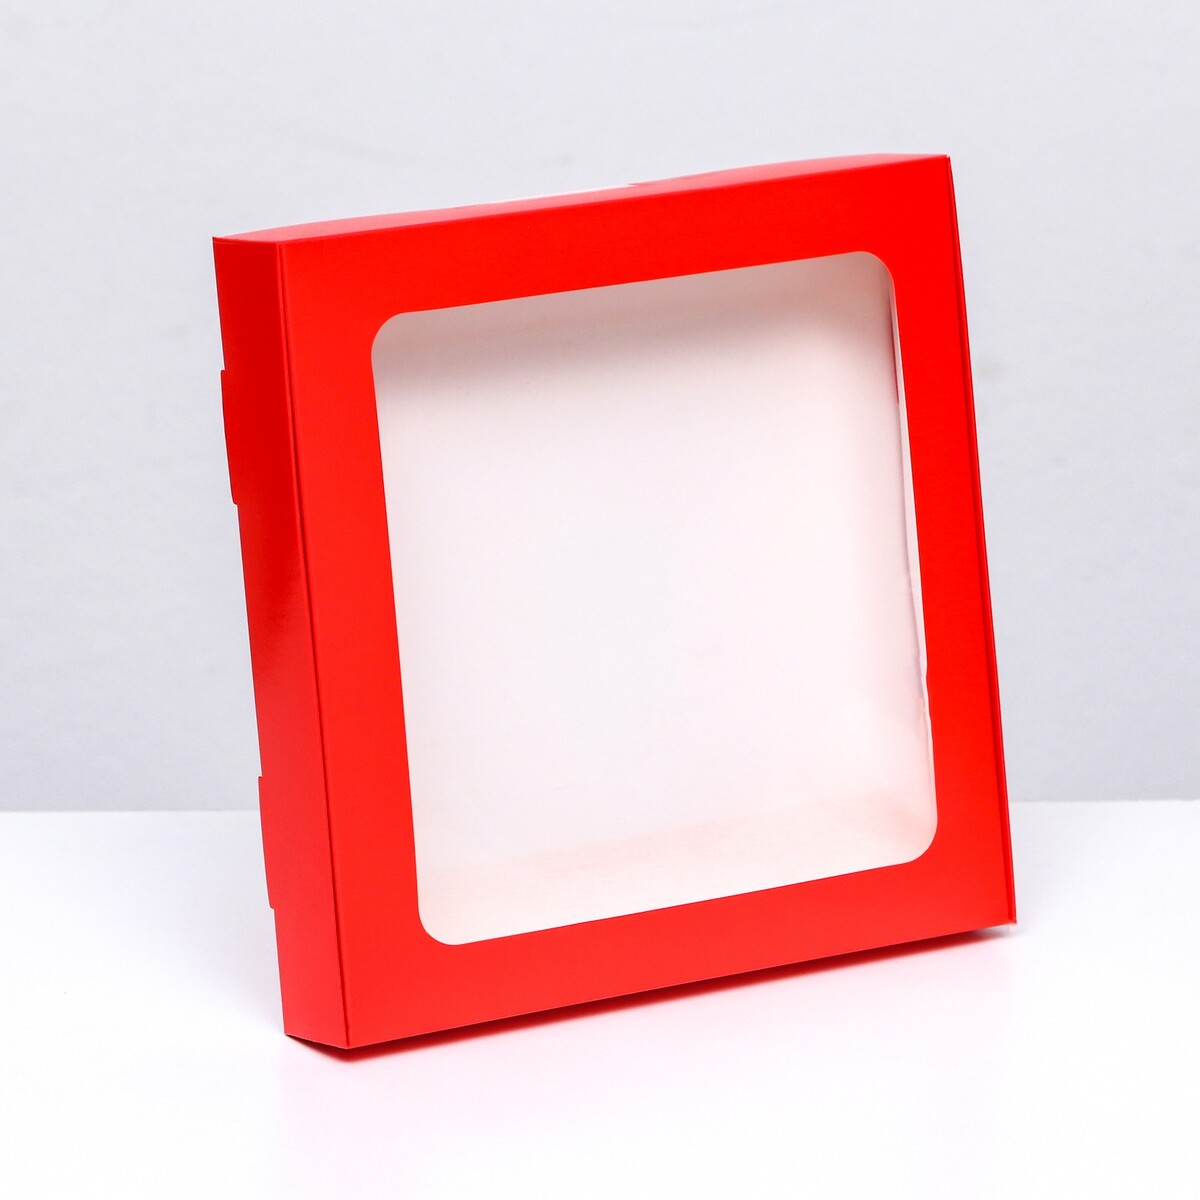 Коробка самосборная, красная с окном, 19 х 19 х 3 см коробка самосборная с окном розовая 16 х 16 х 3 см